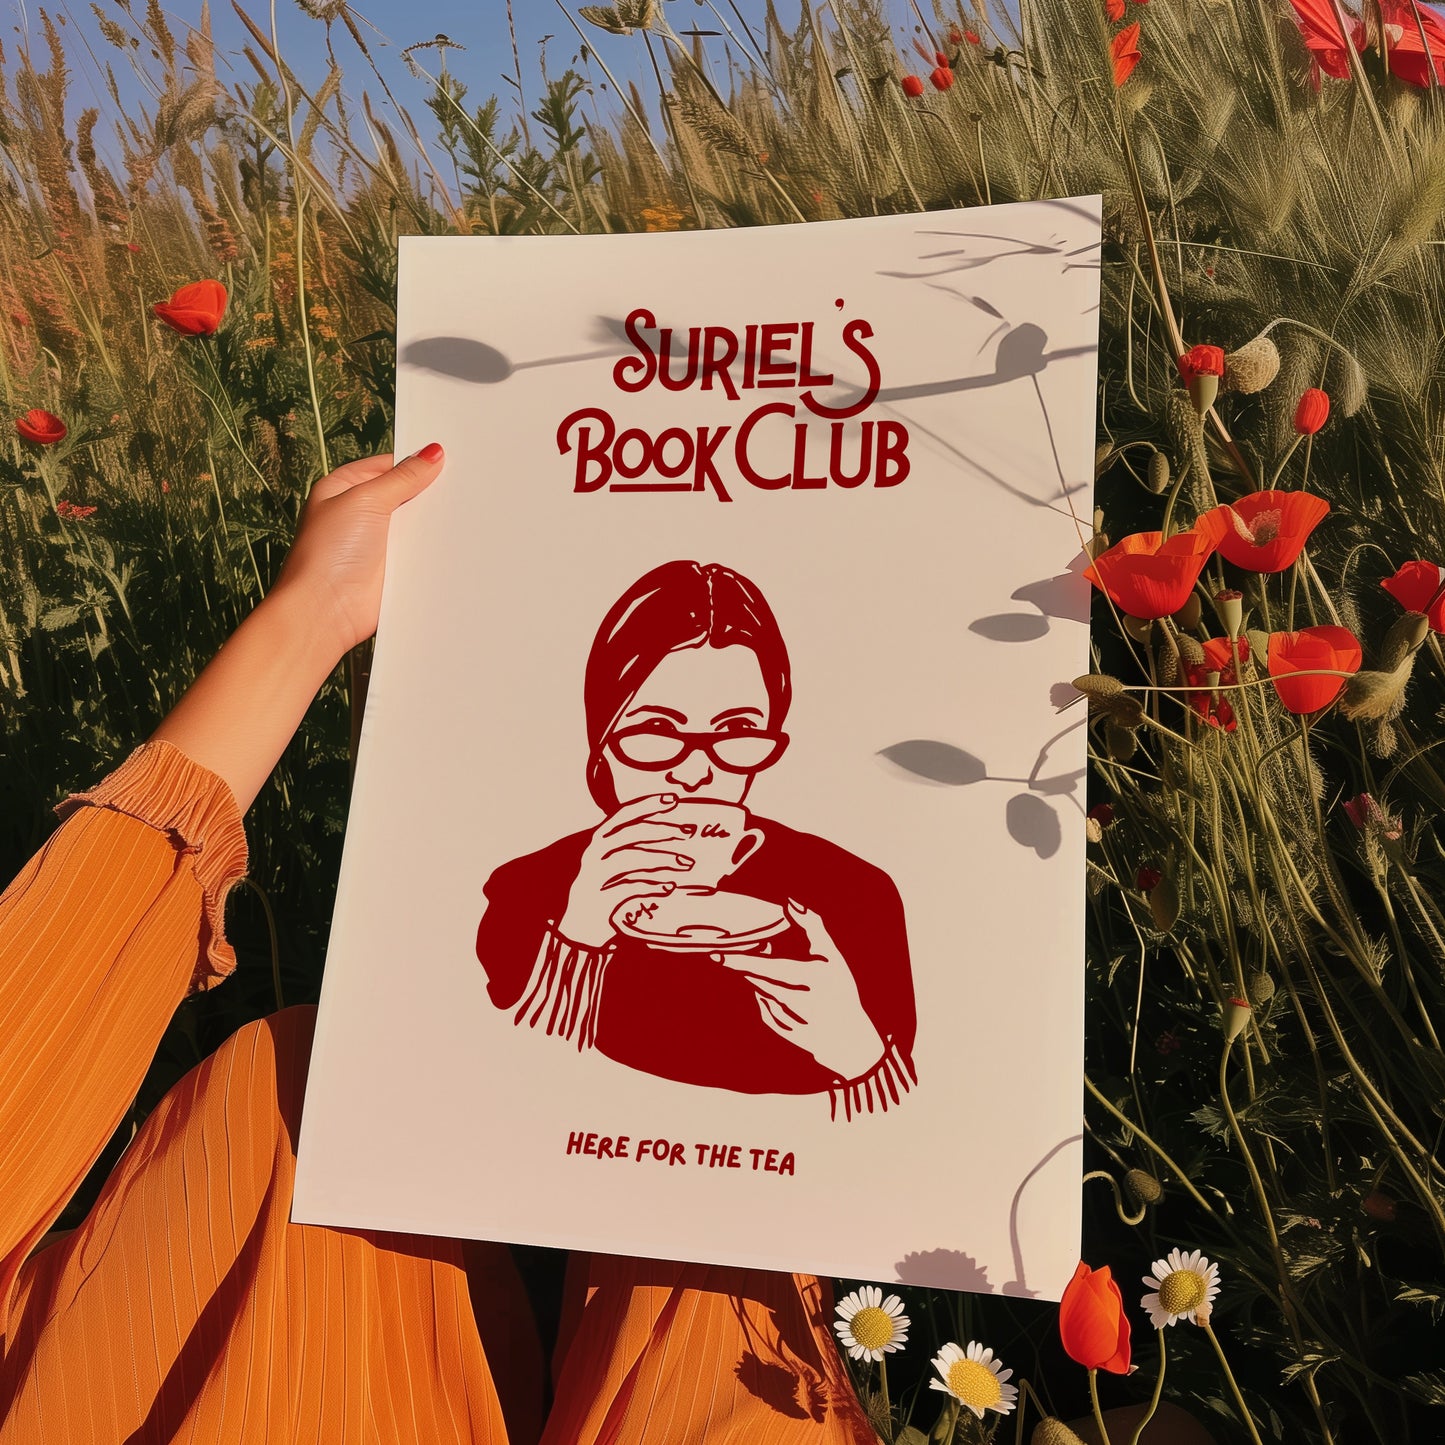 Suriel's Book Club Poster